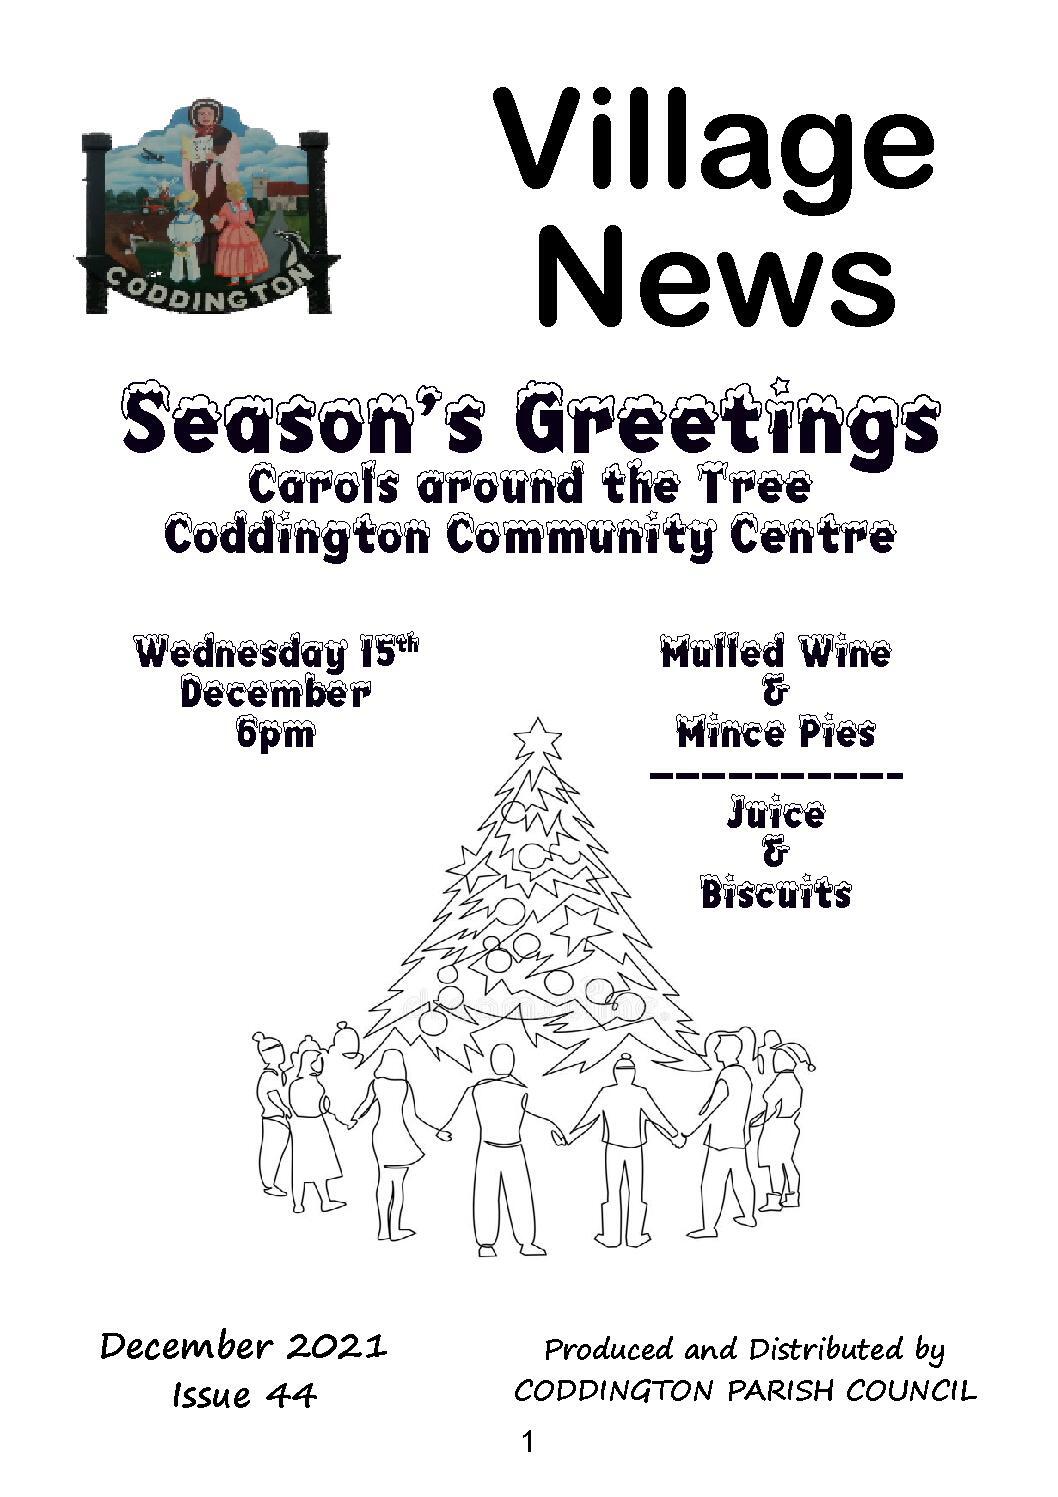 Coddington Village News - December 2021